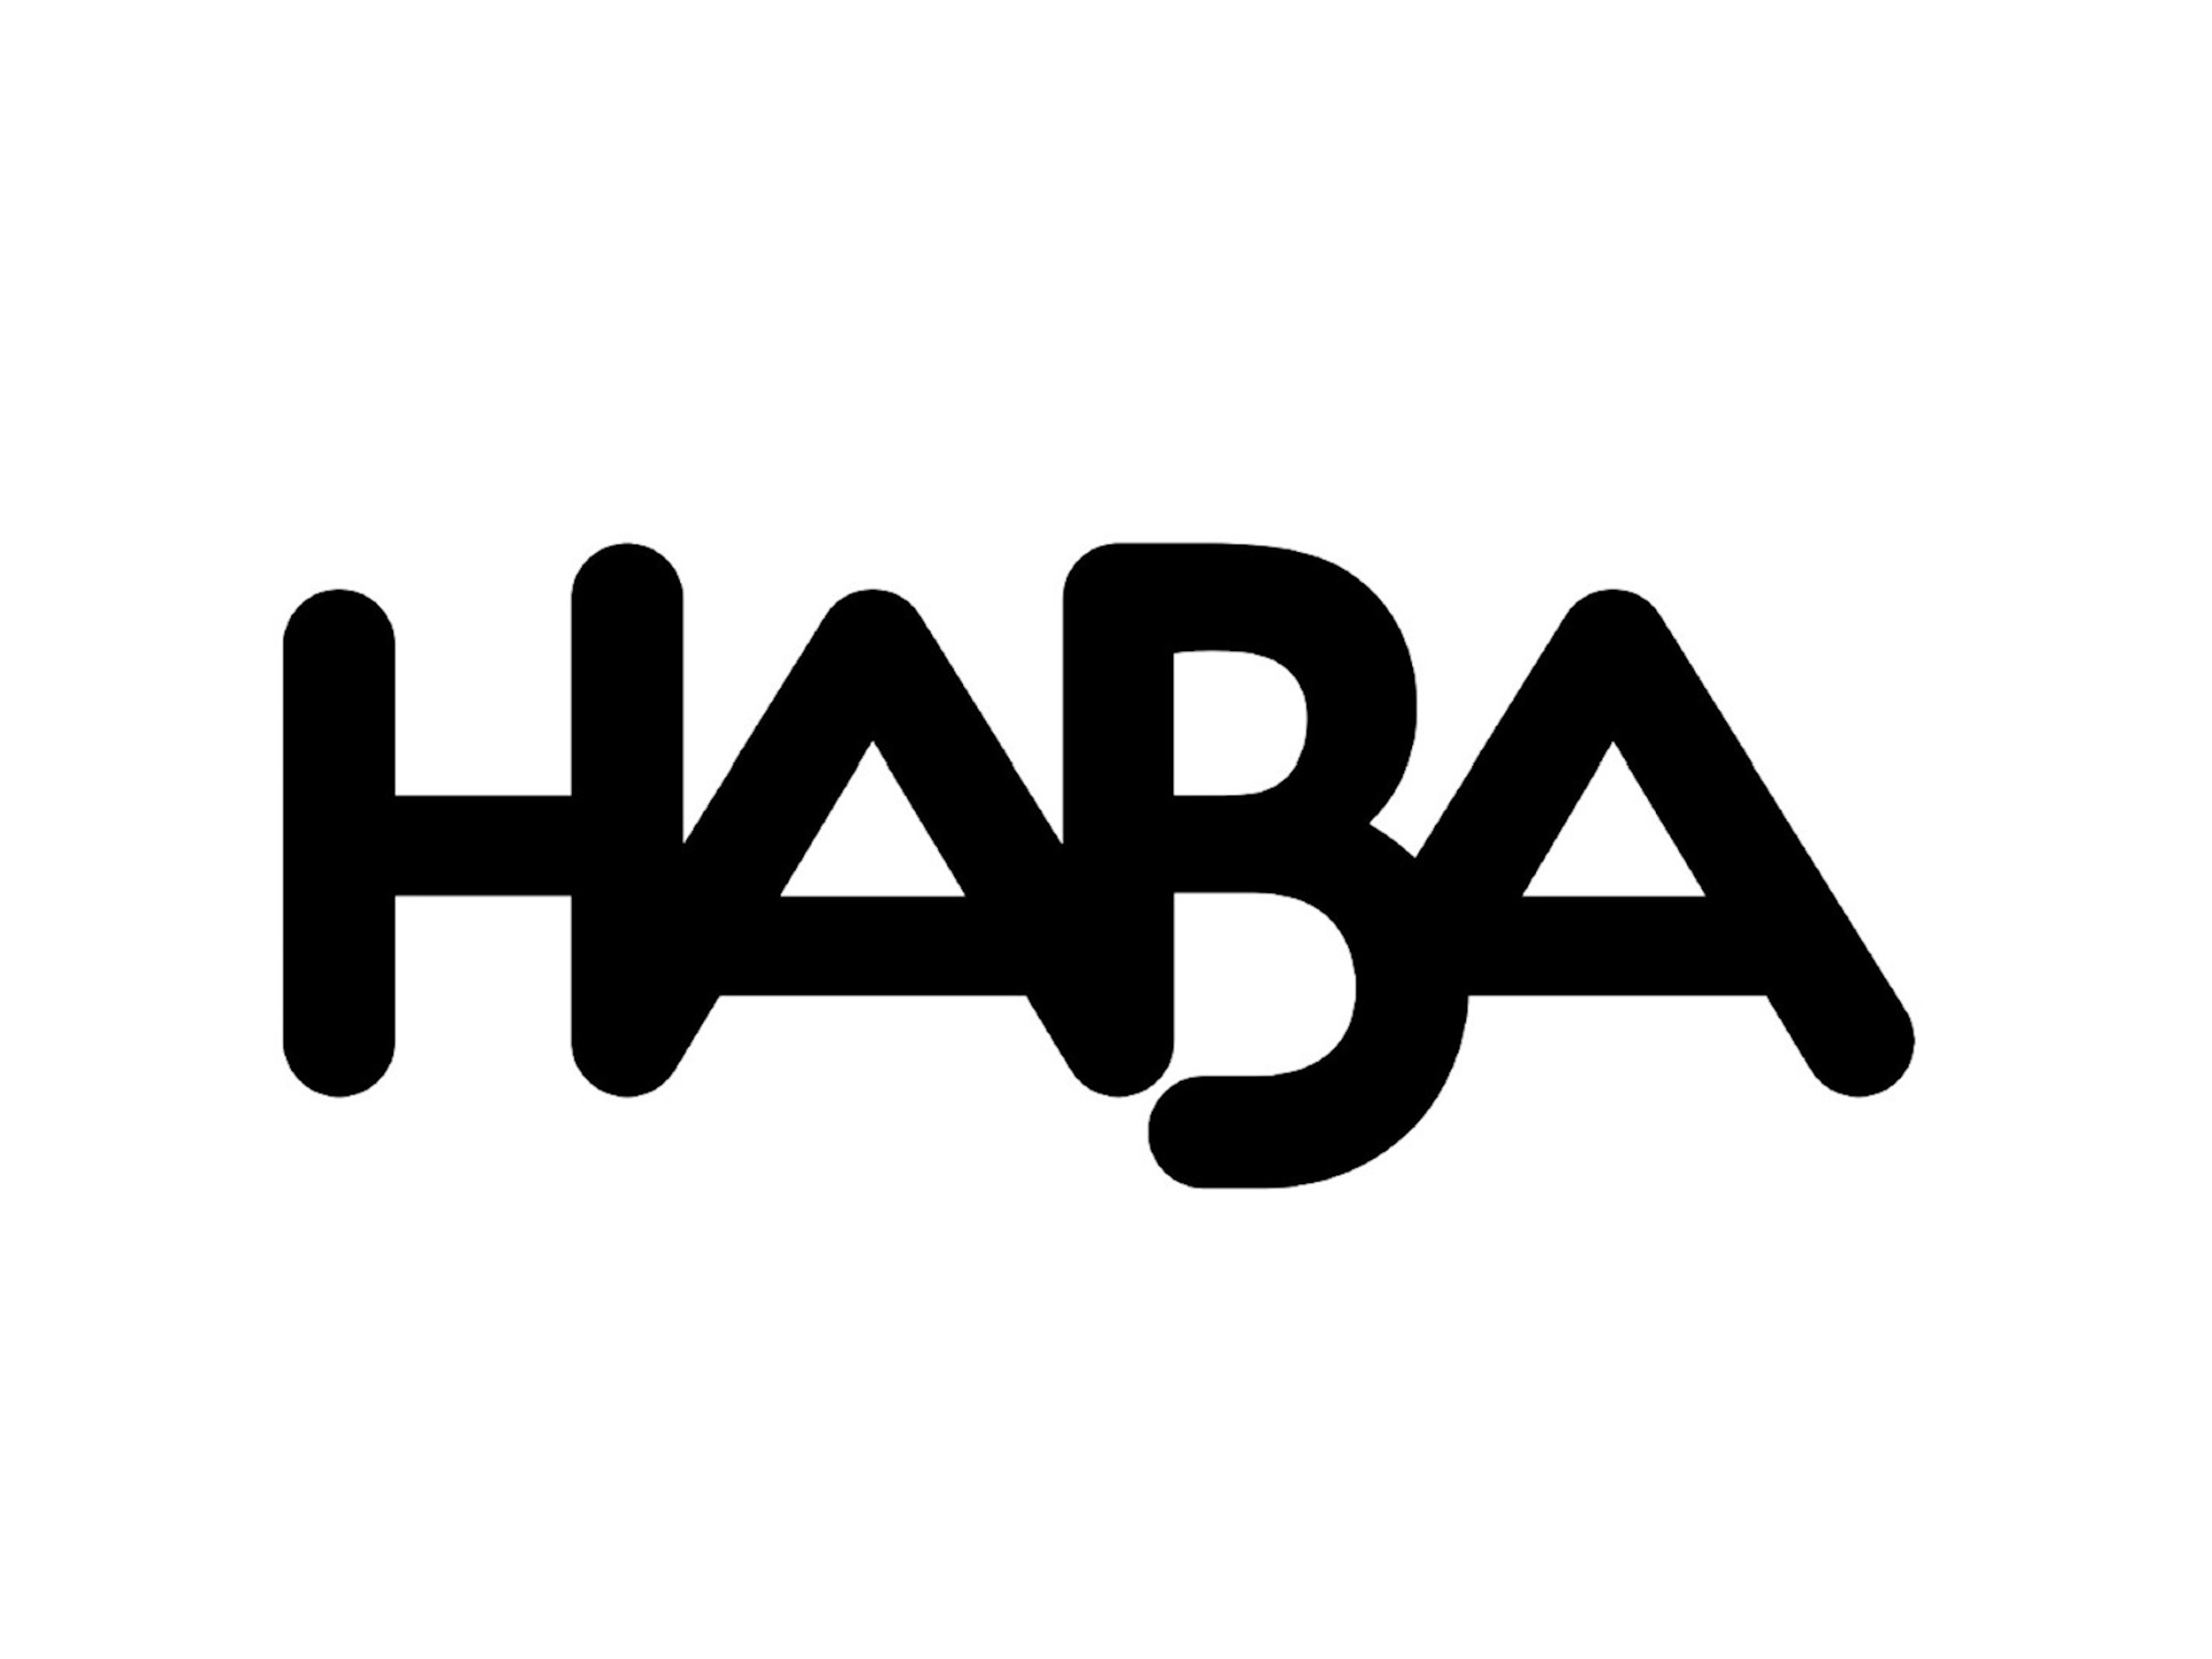 HABA Sales GmbH & Co. KG